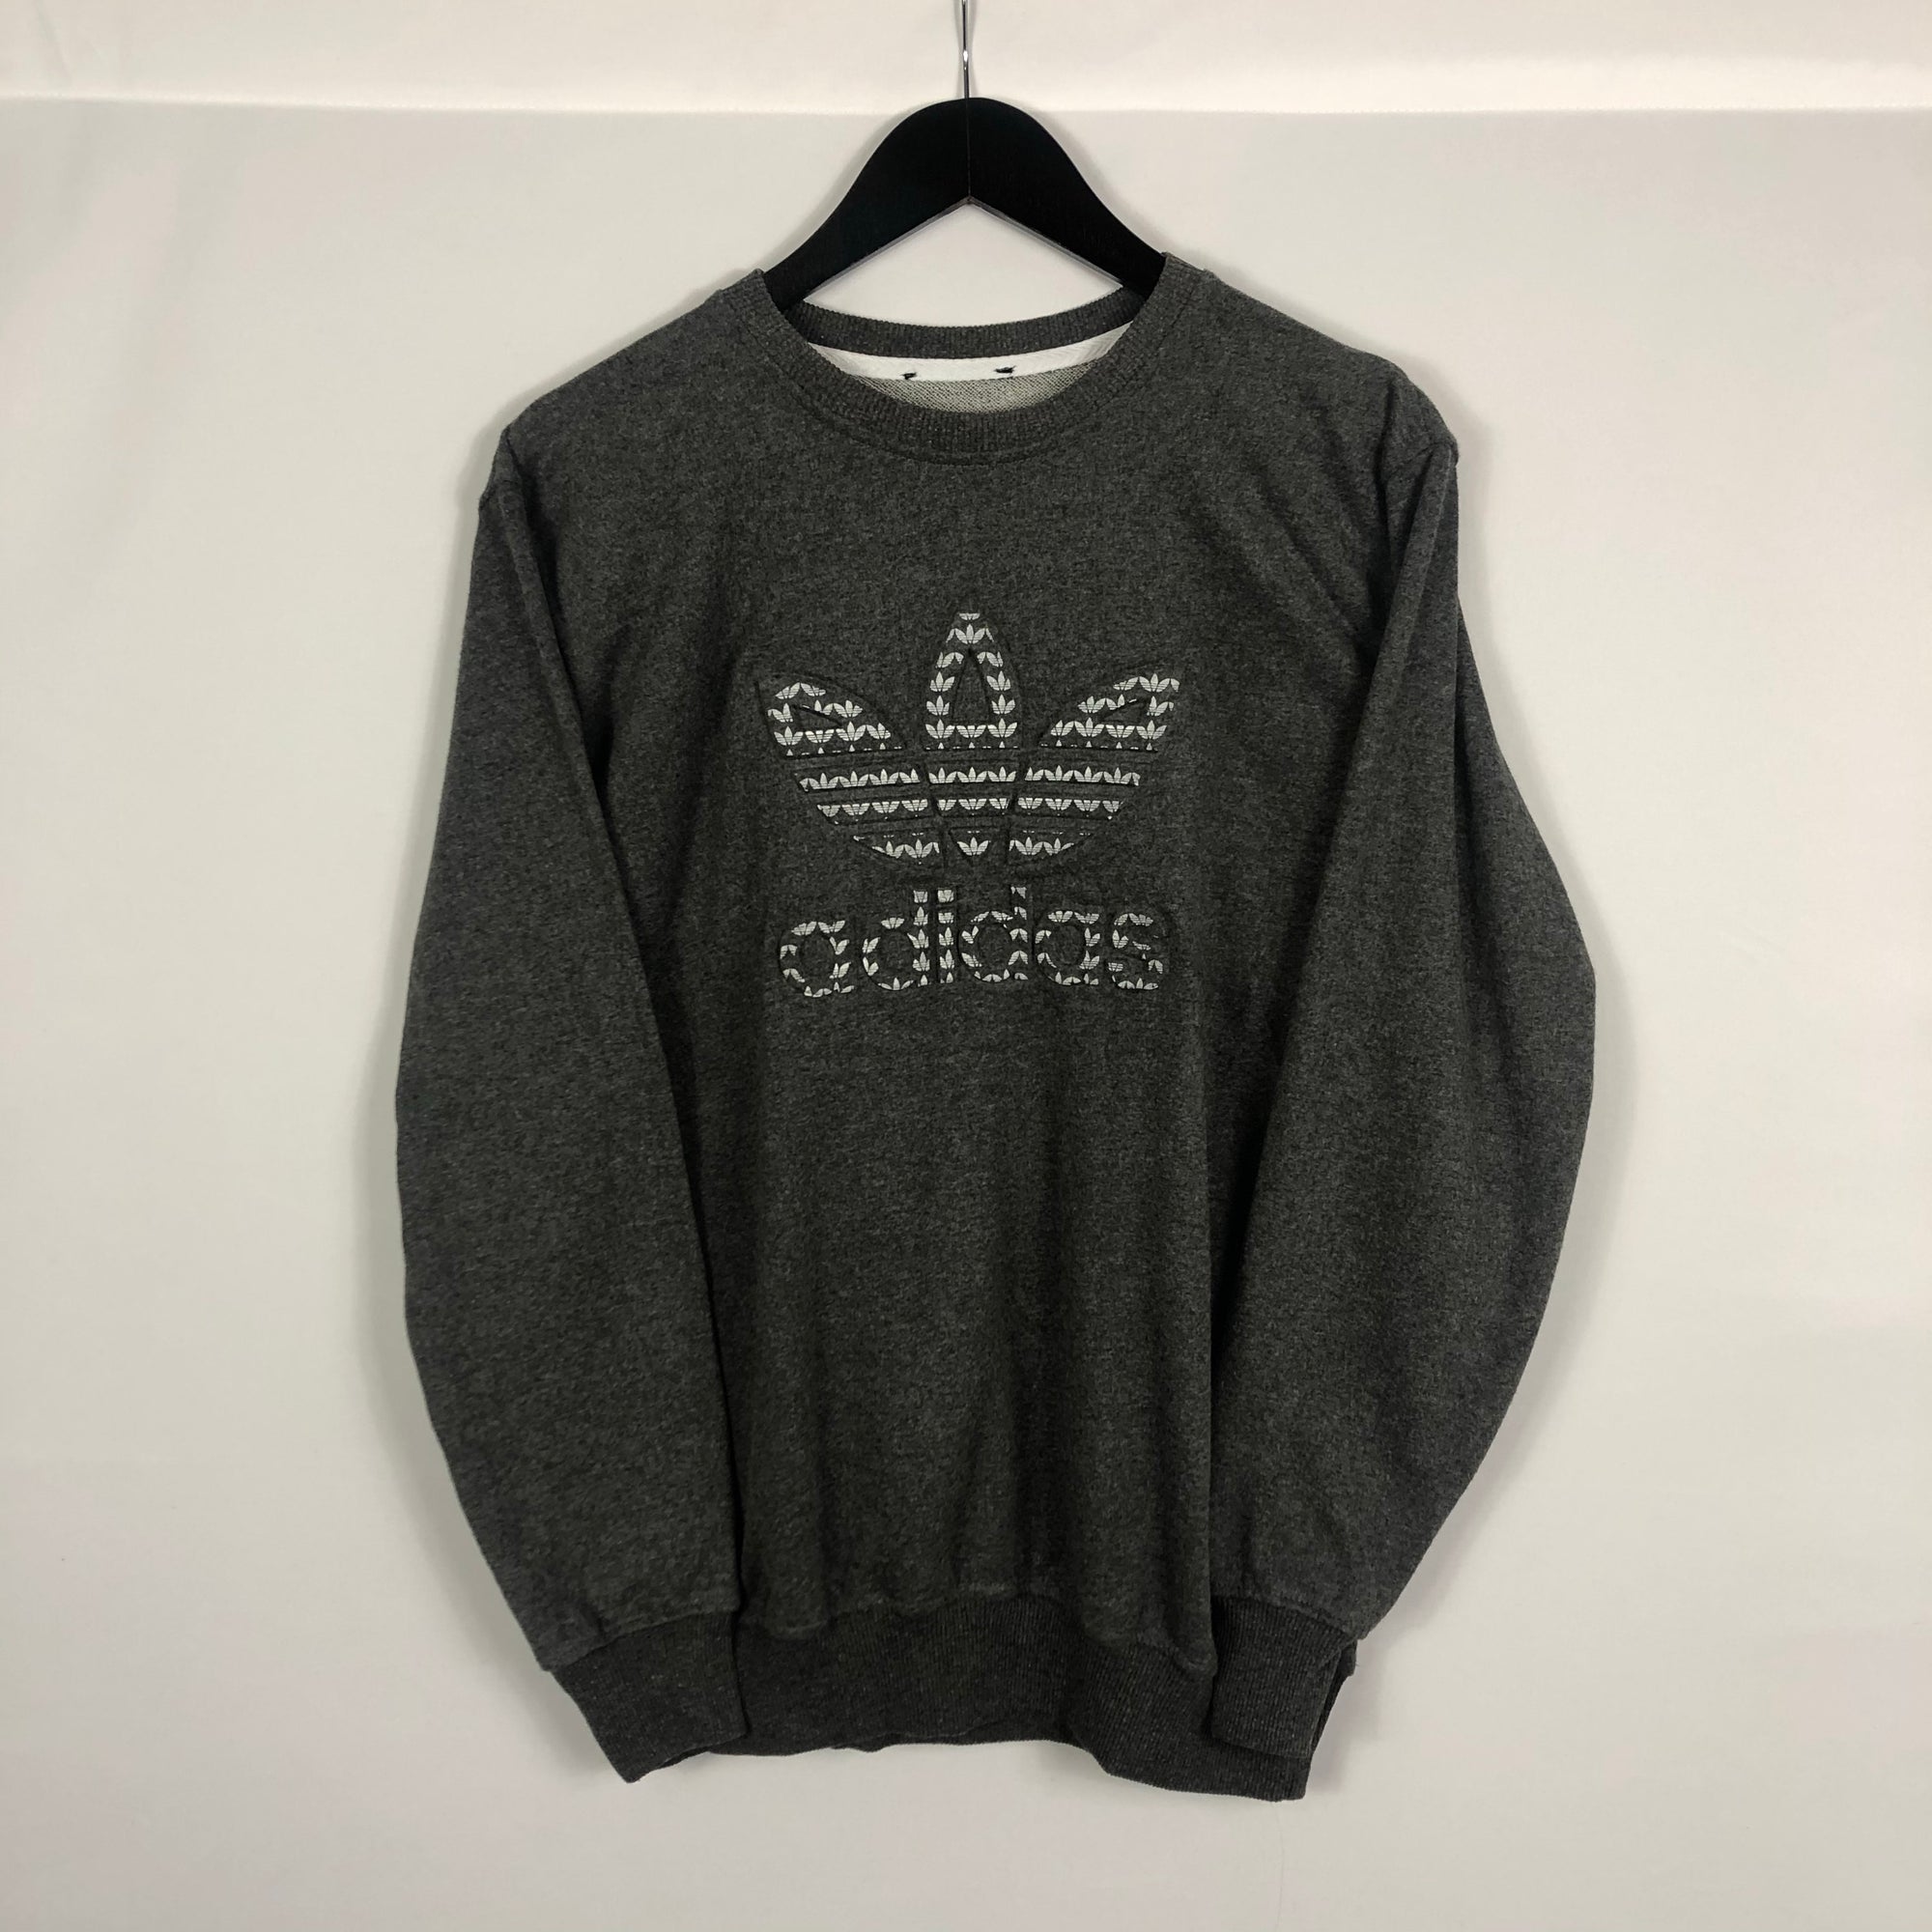 Adidas Spellout Sweatshirt with Embossed Logo - Medium